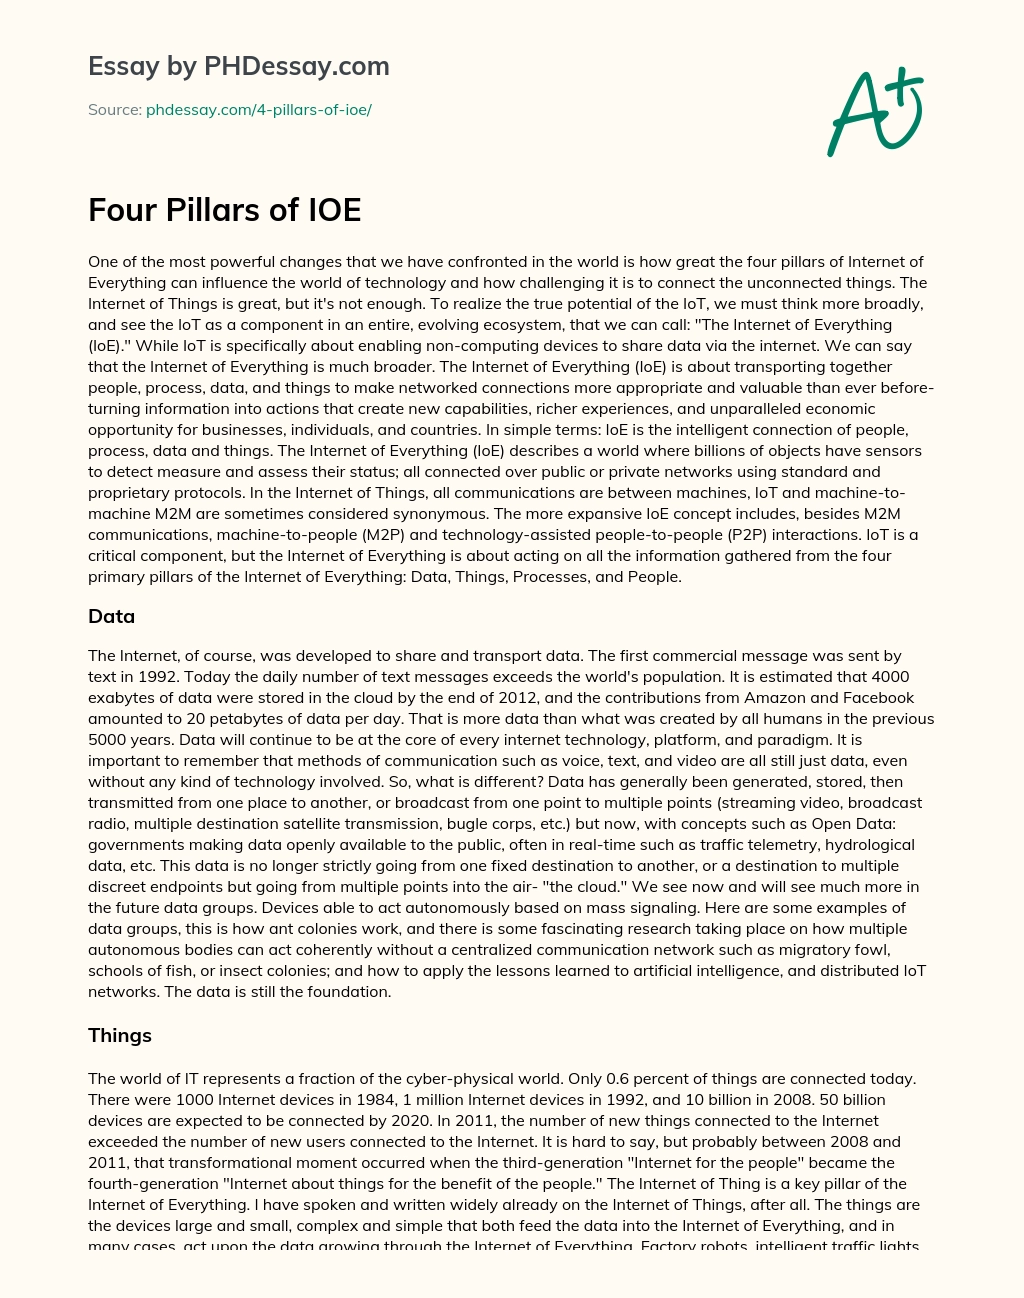 Four Pillars of IOE essay